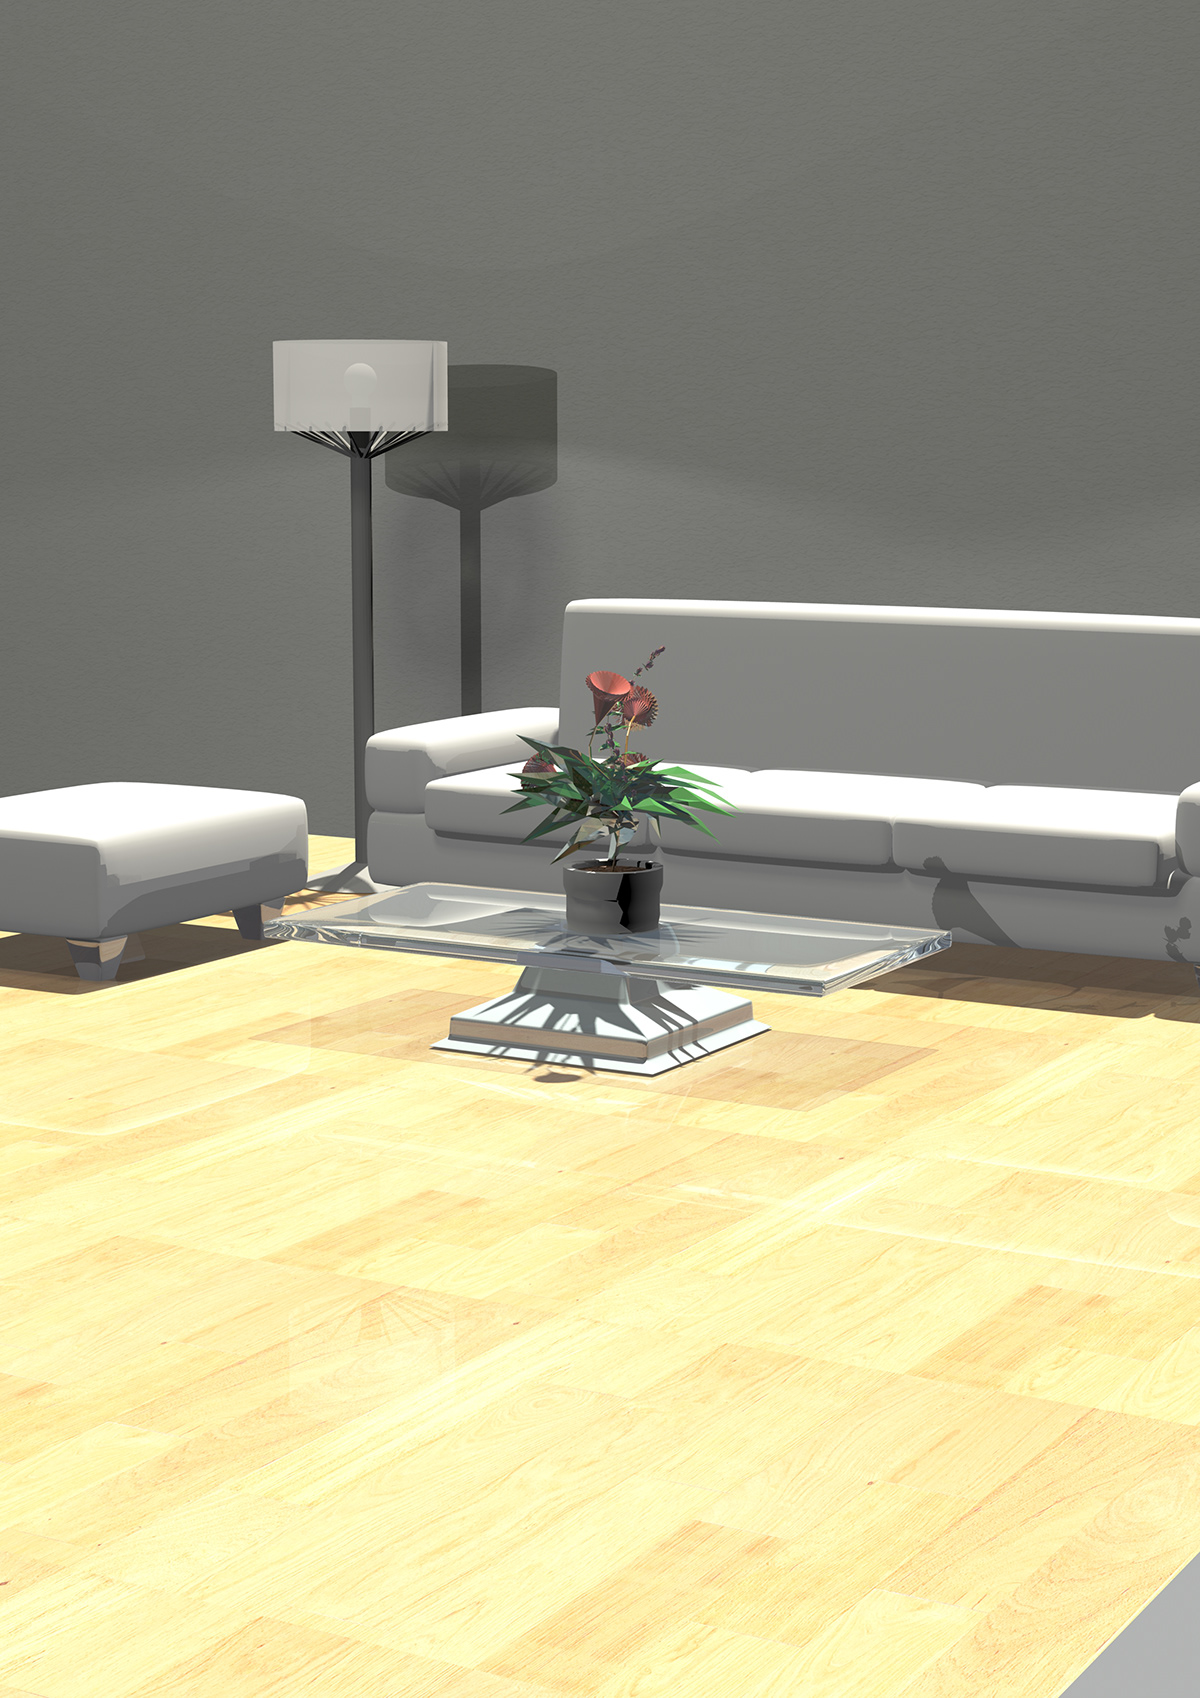 sala de estar sala sofa mesa vidro flor comodo casa Interior design